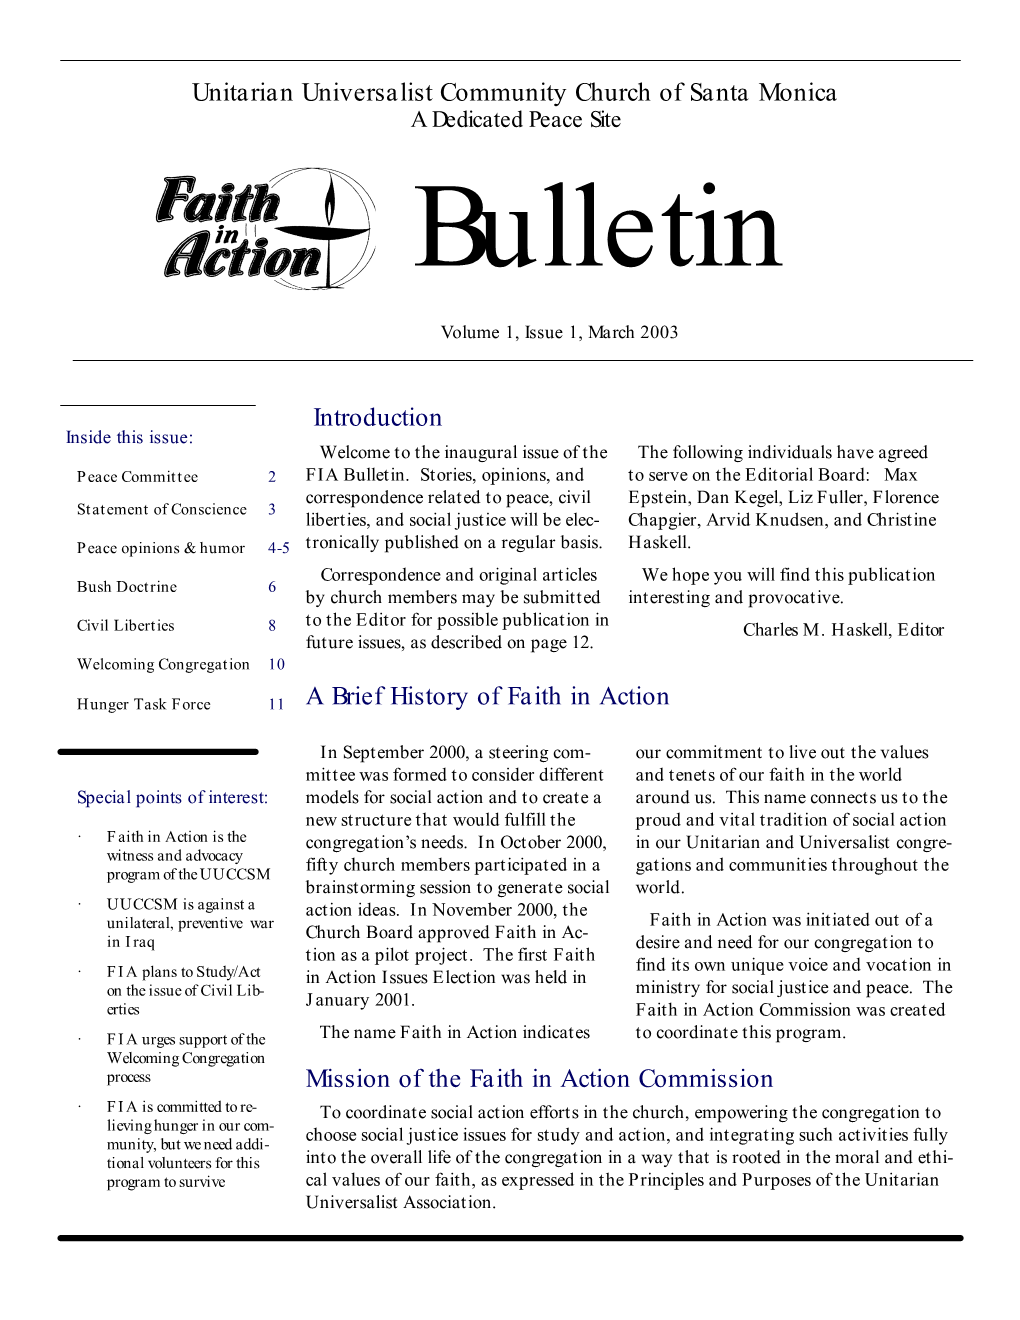 Unitarian Universalist Community Church of Santa Monica a Dedicated Peace Site Bulletin